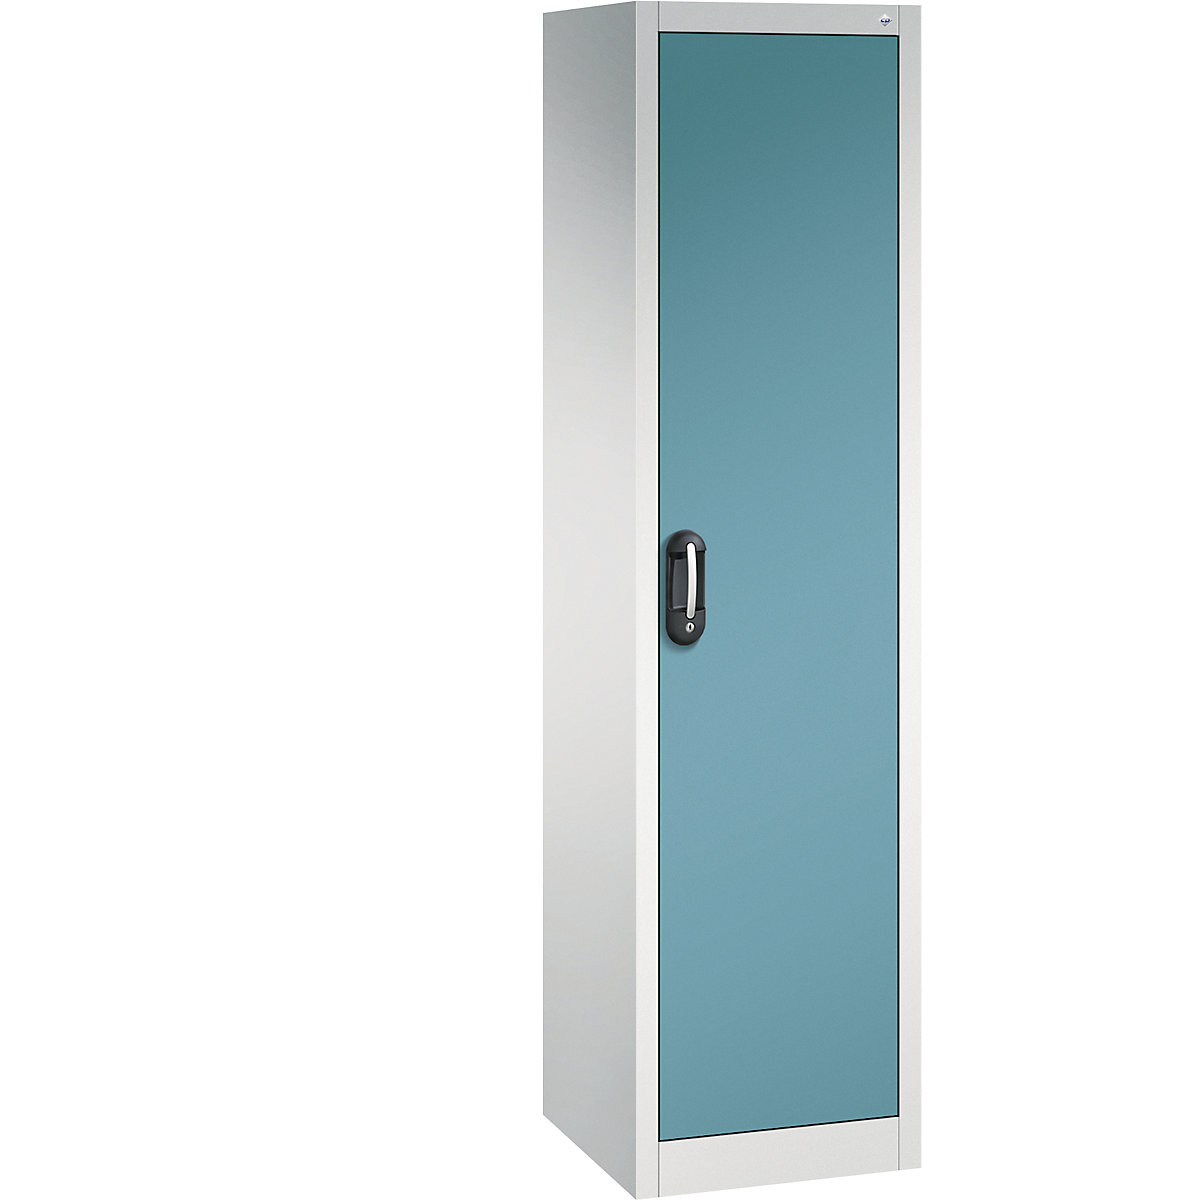 C+P – ACURADO universal cupboard, WxD 500 x 500 mm, light grey / water blue